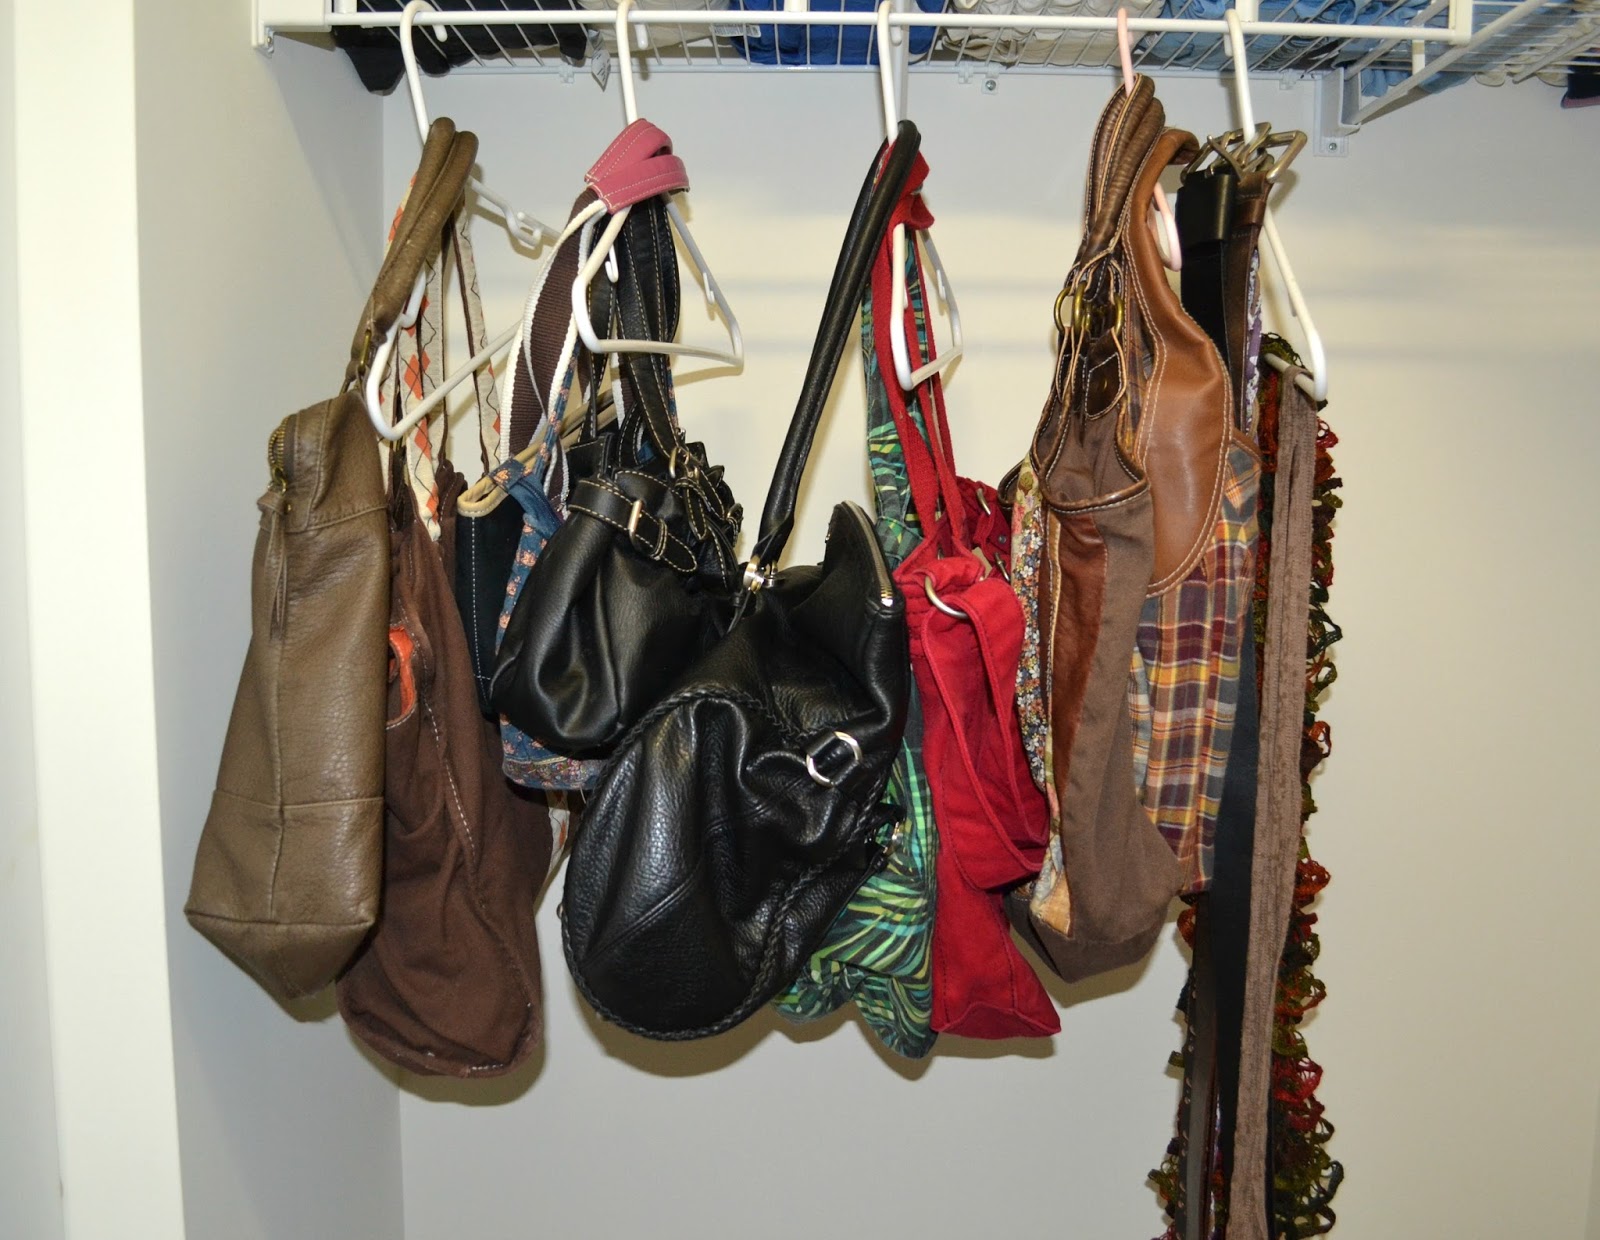 How To Organize Handbags In Closet | Home Improvement